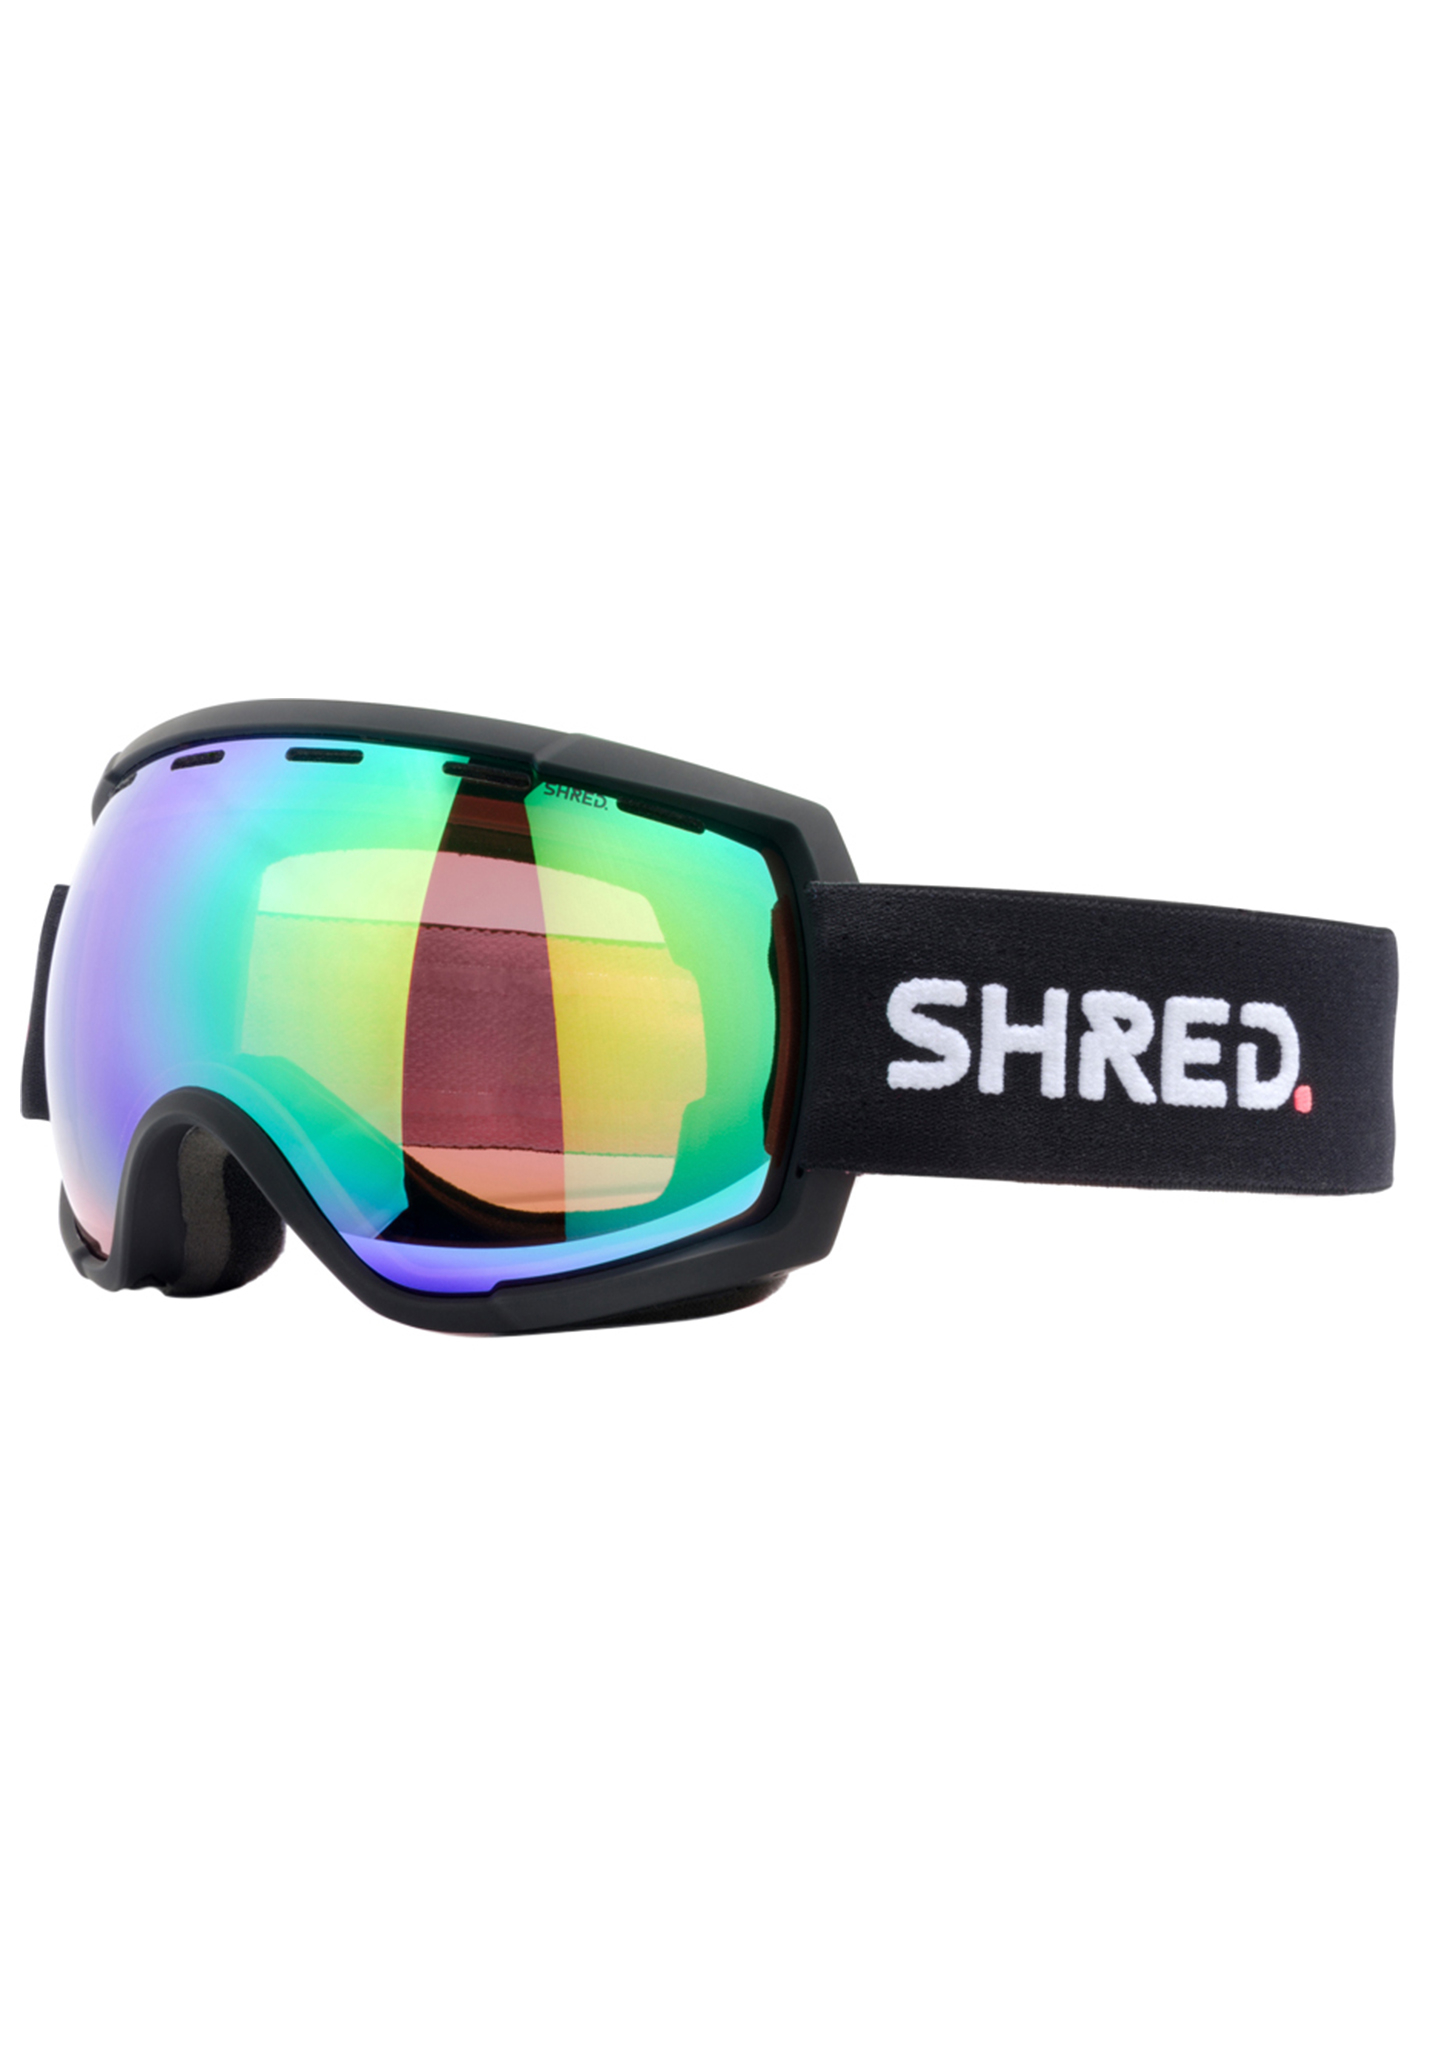 Shred Rarify + Snowboardbrillen schwarz/cbl plasmaspiegel + cbl himmel One Size